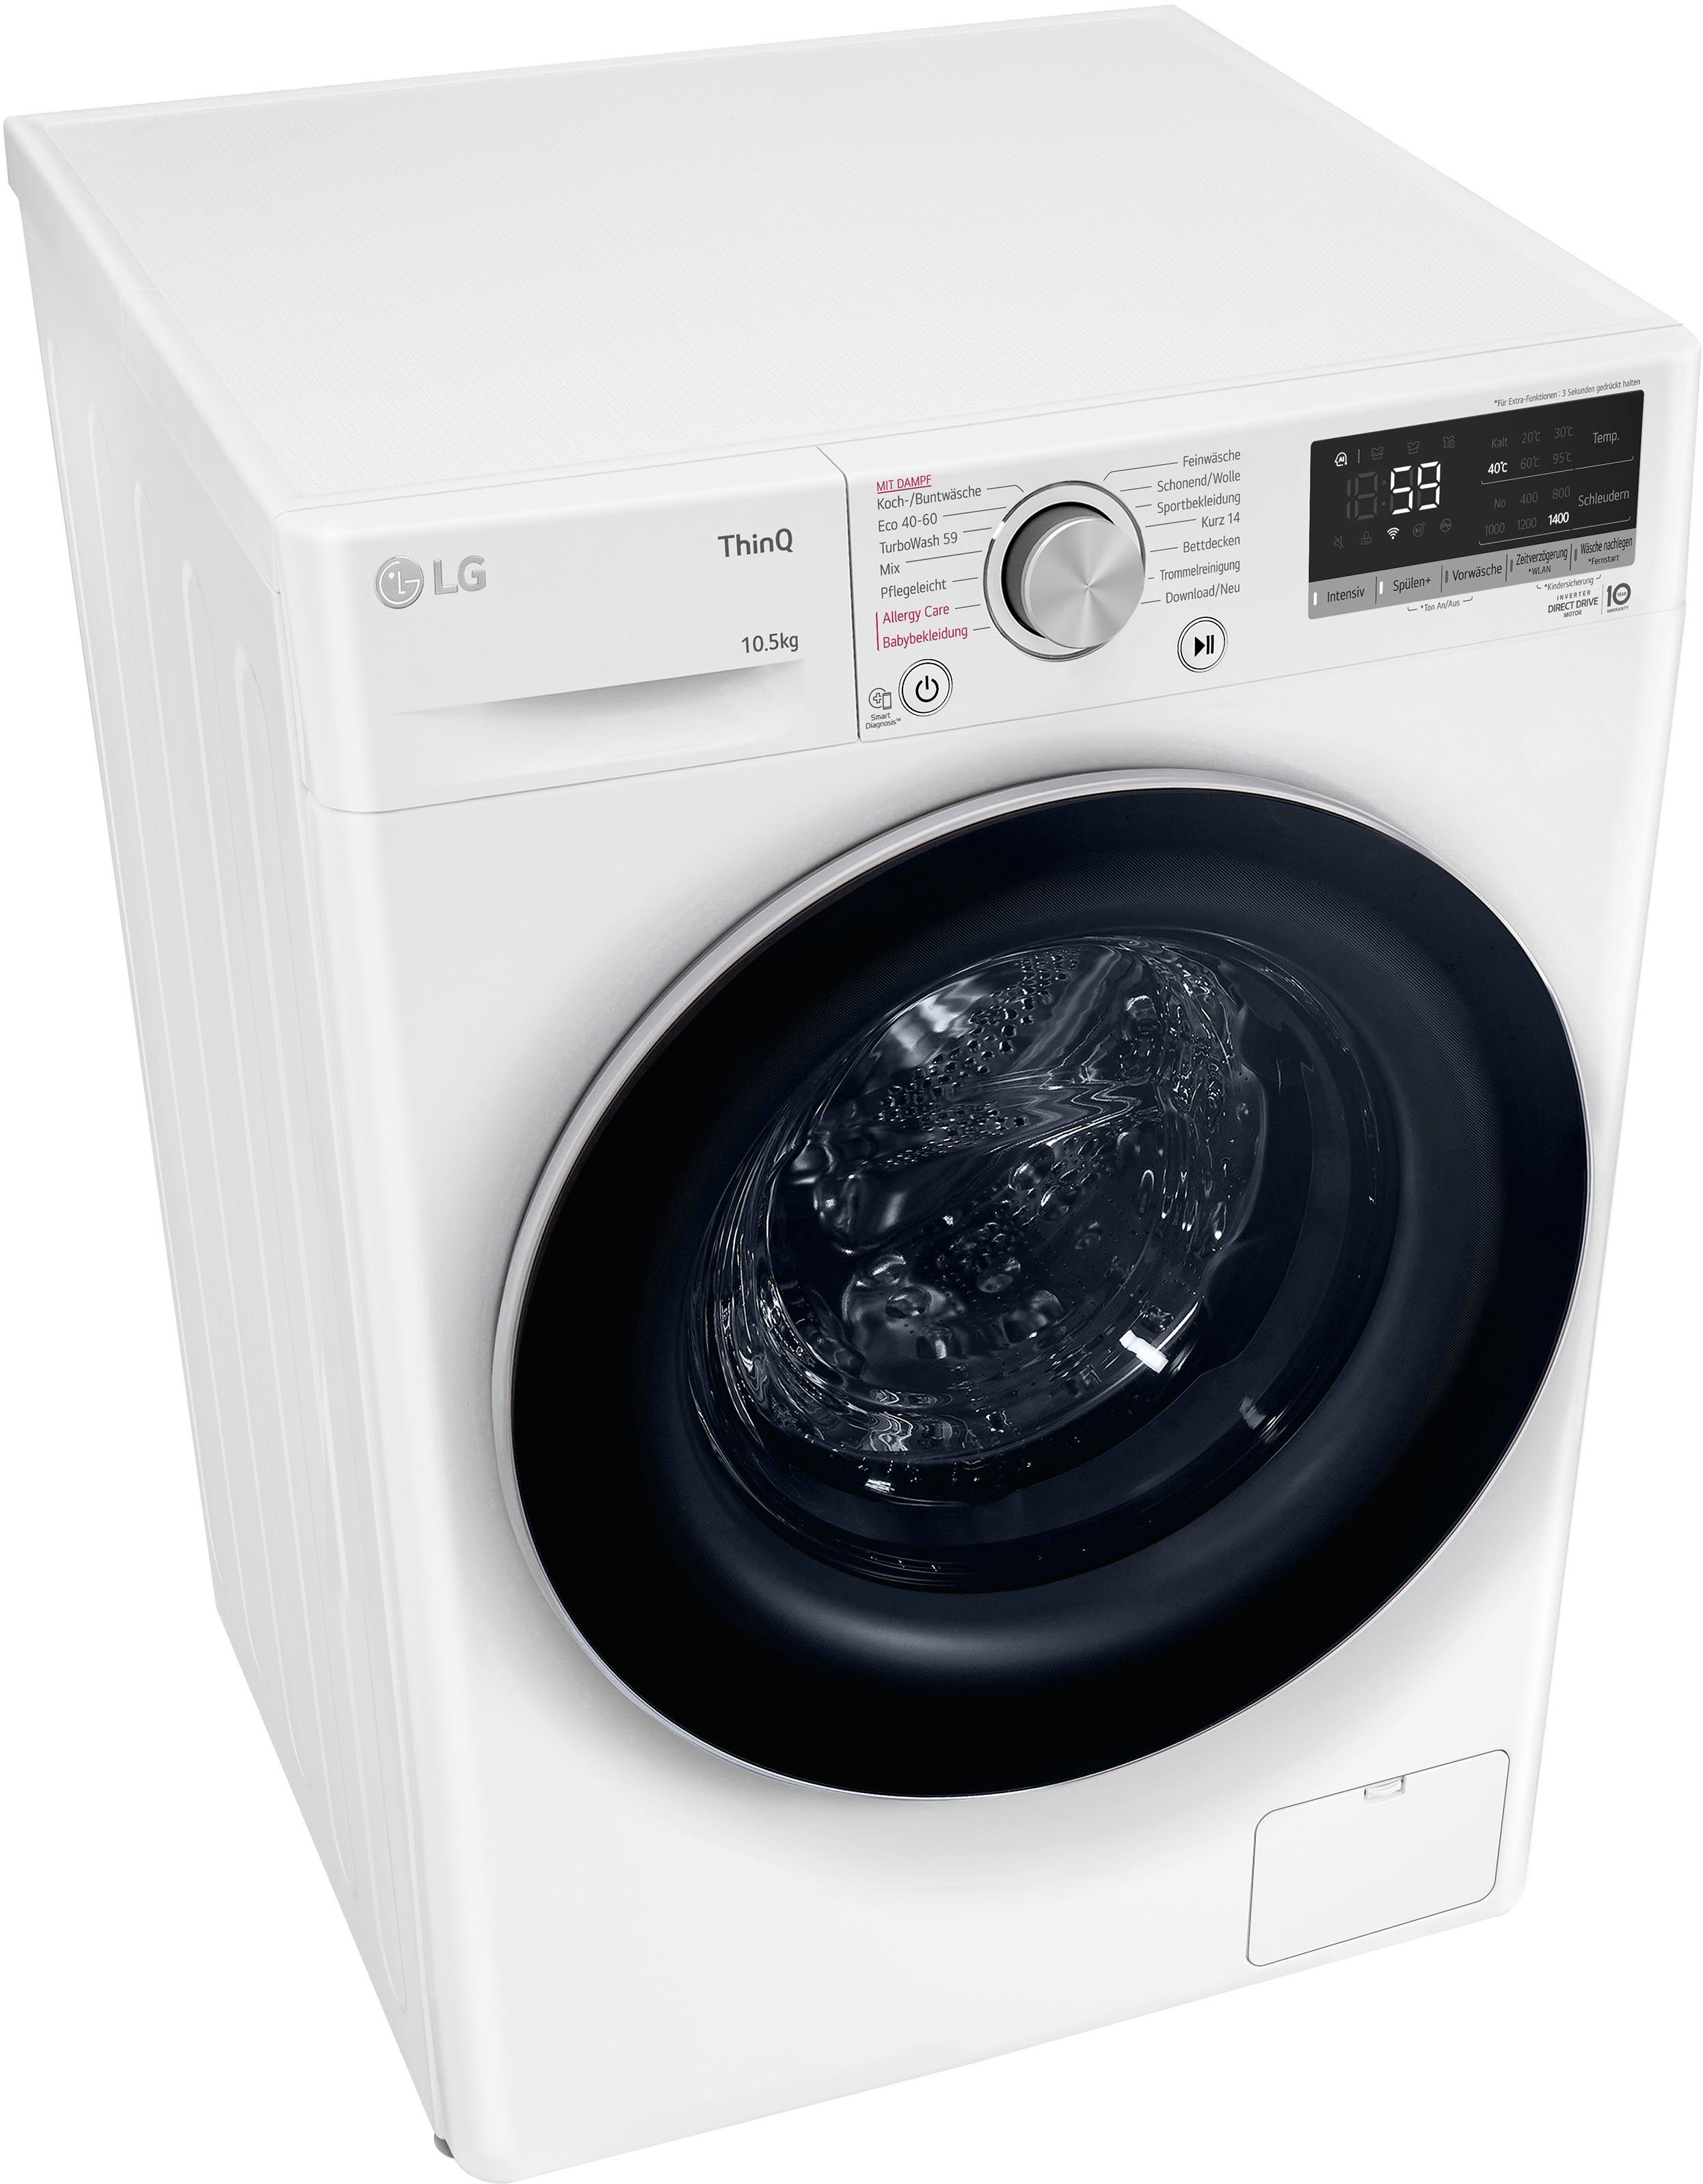 kg, LG Waschmaschine U/min 1400 F4WV70X1, 10,5